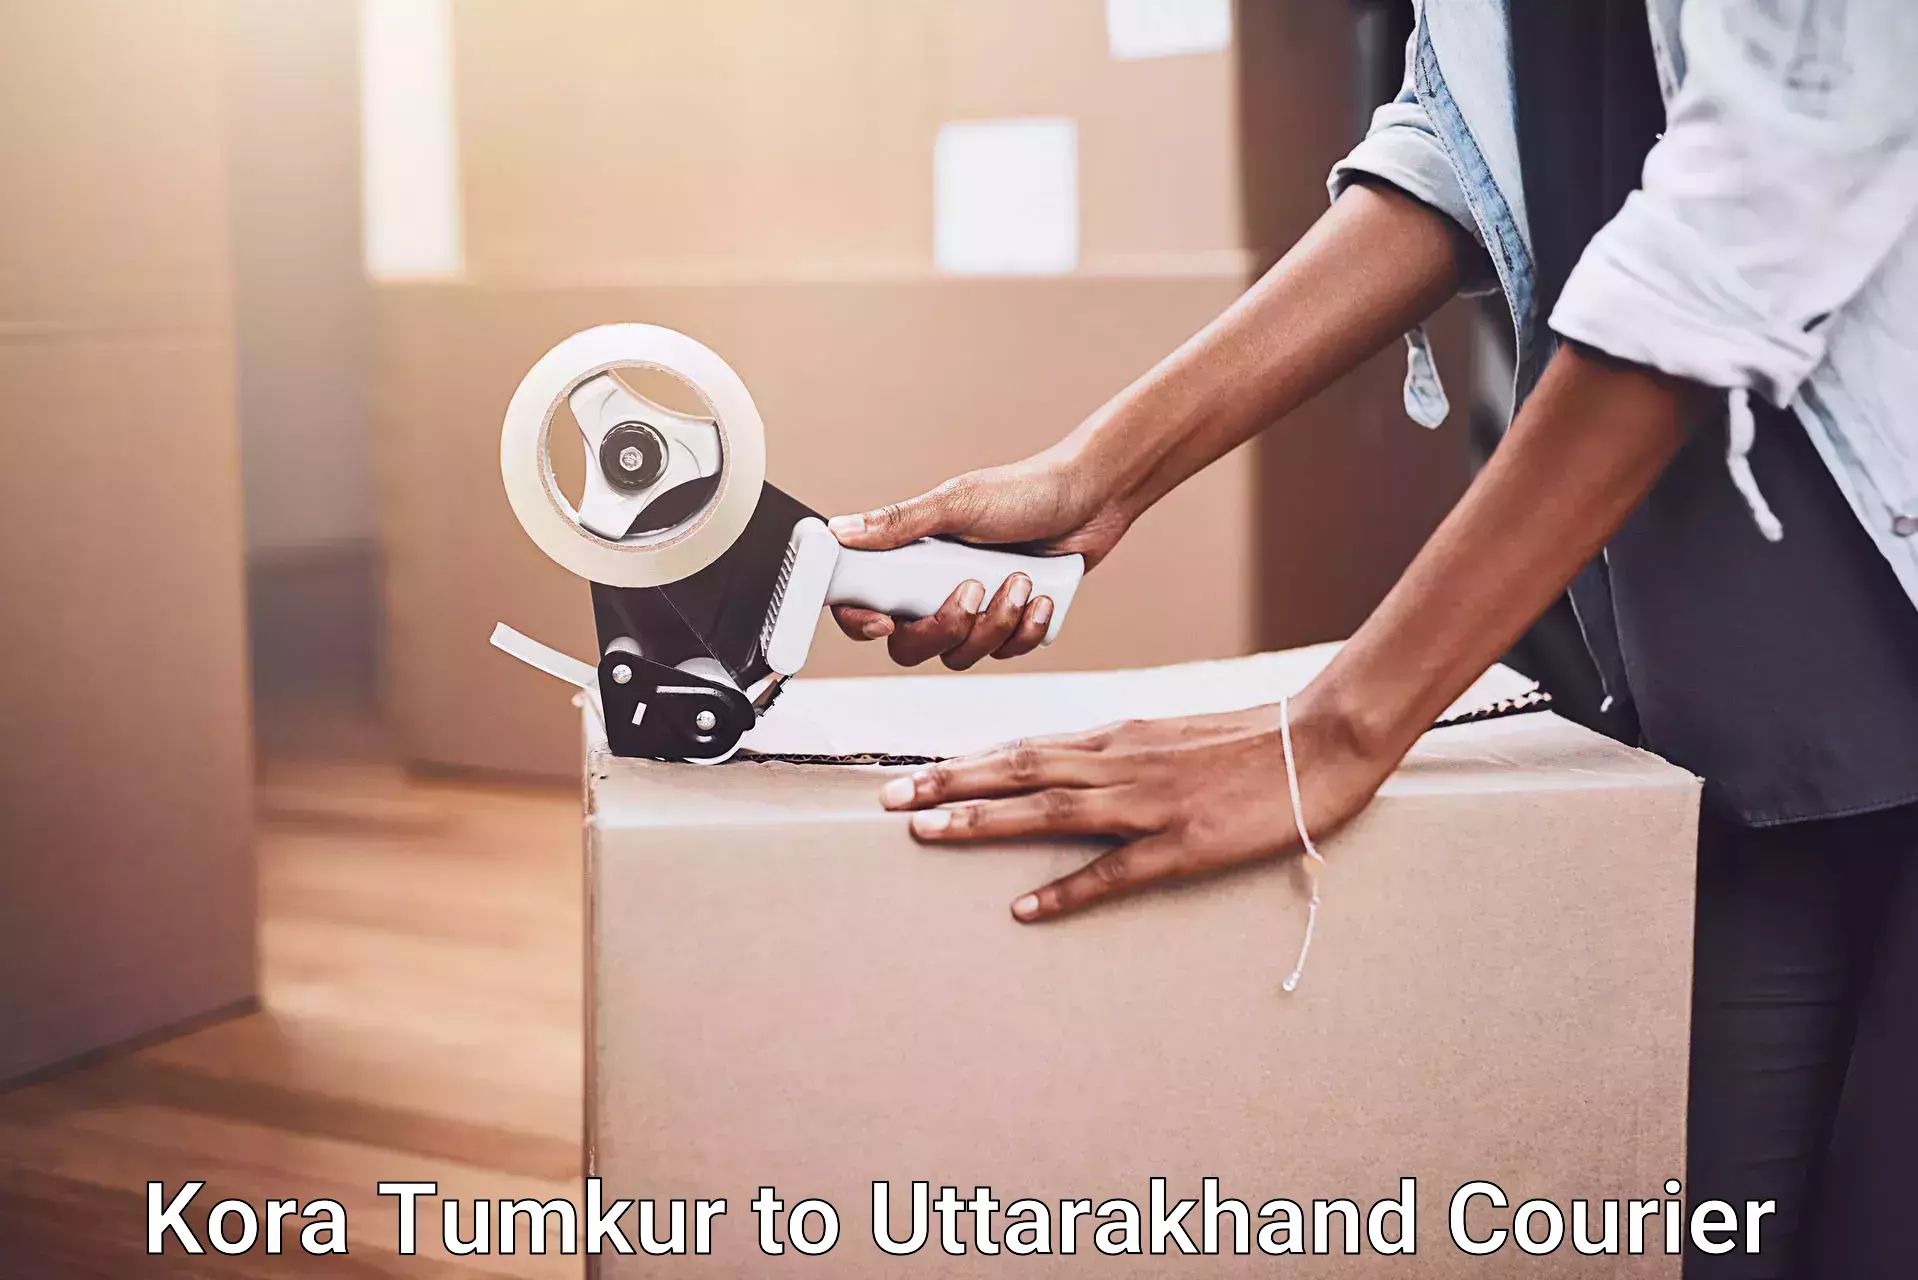 Budget-friendly movers in Kora Tumkur to Uttarakhand